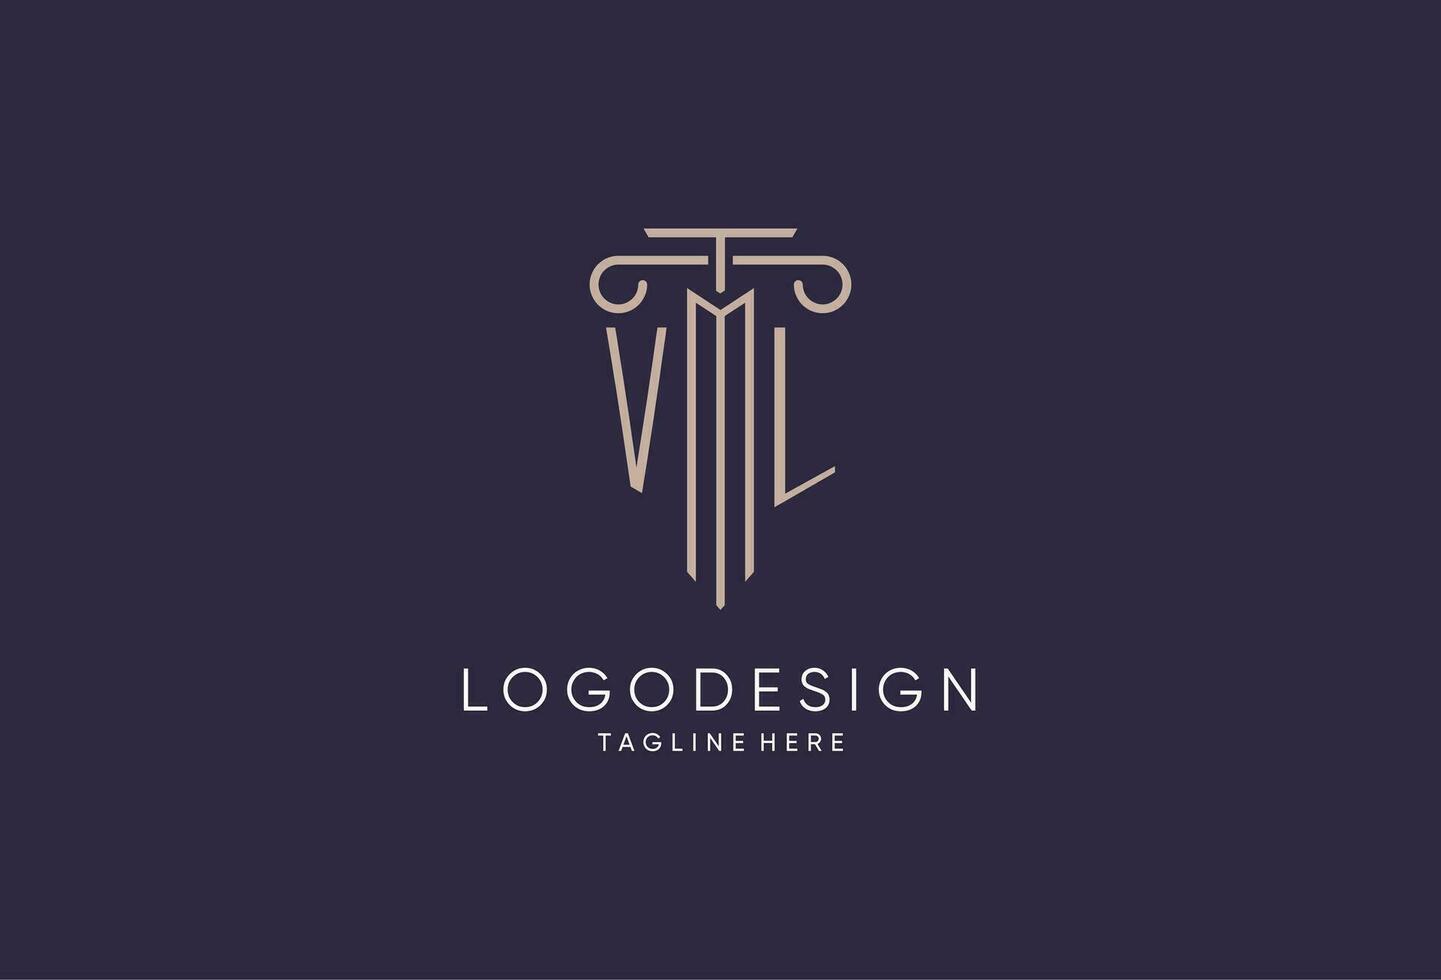 vl logo inicial pilar diseño con lujo moderno estilo mejor diseño para legal firma vector